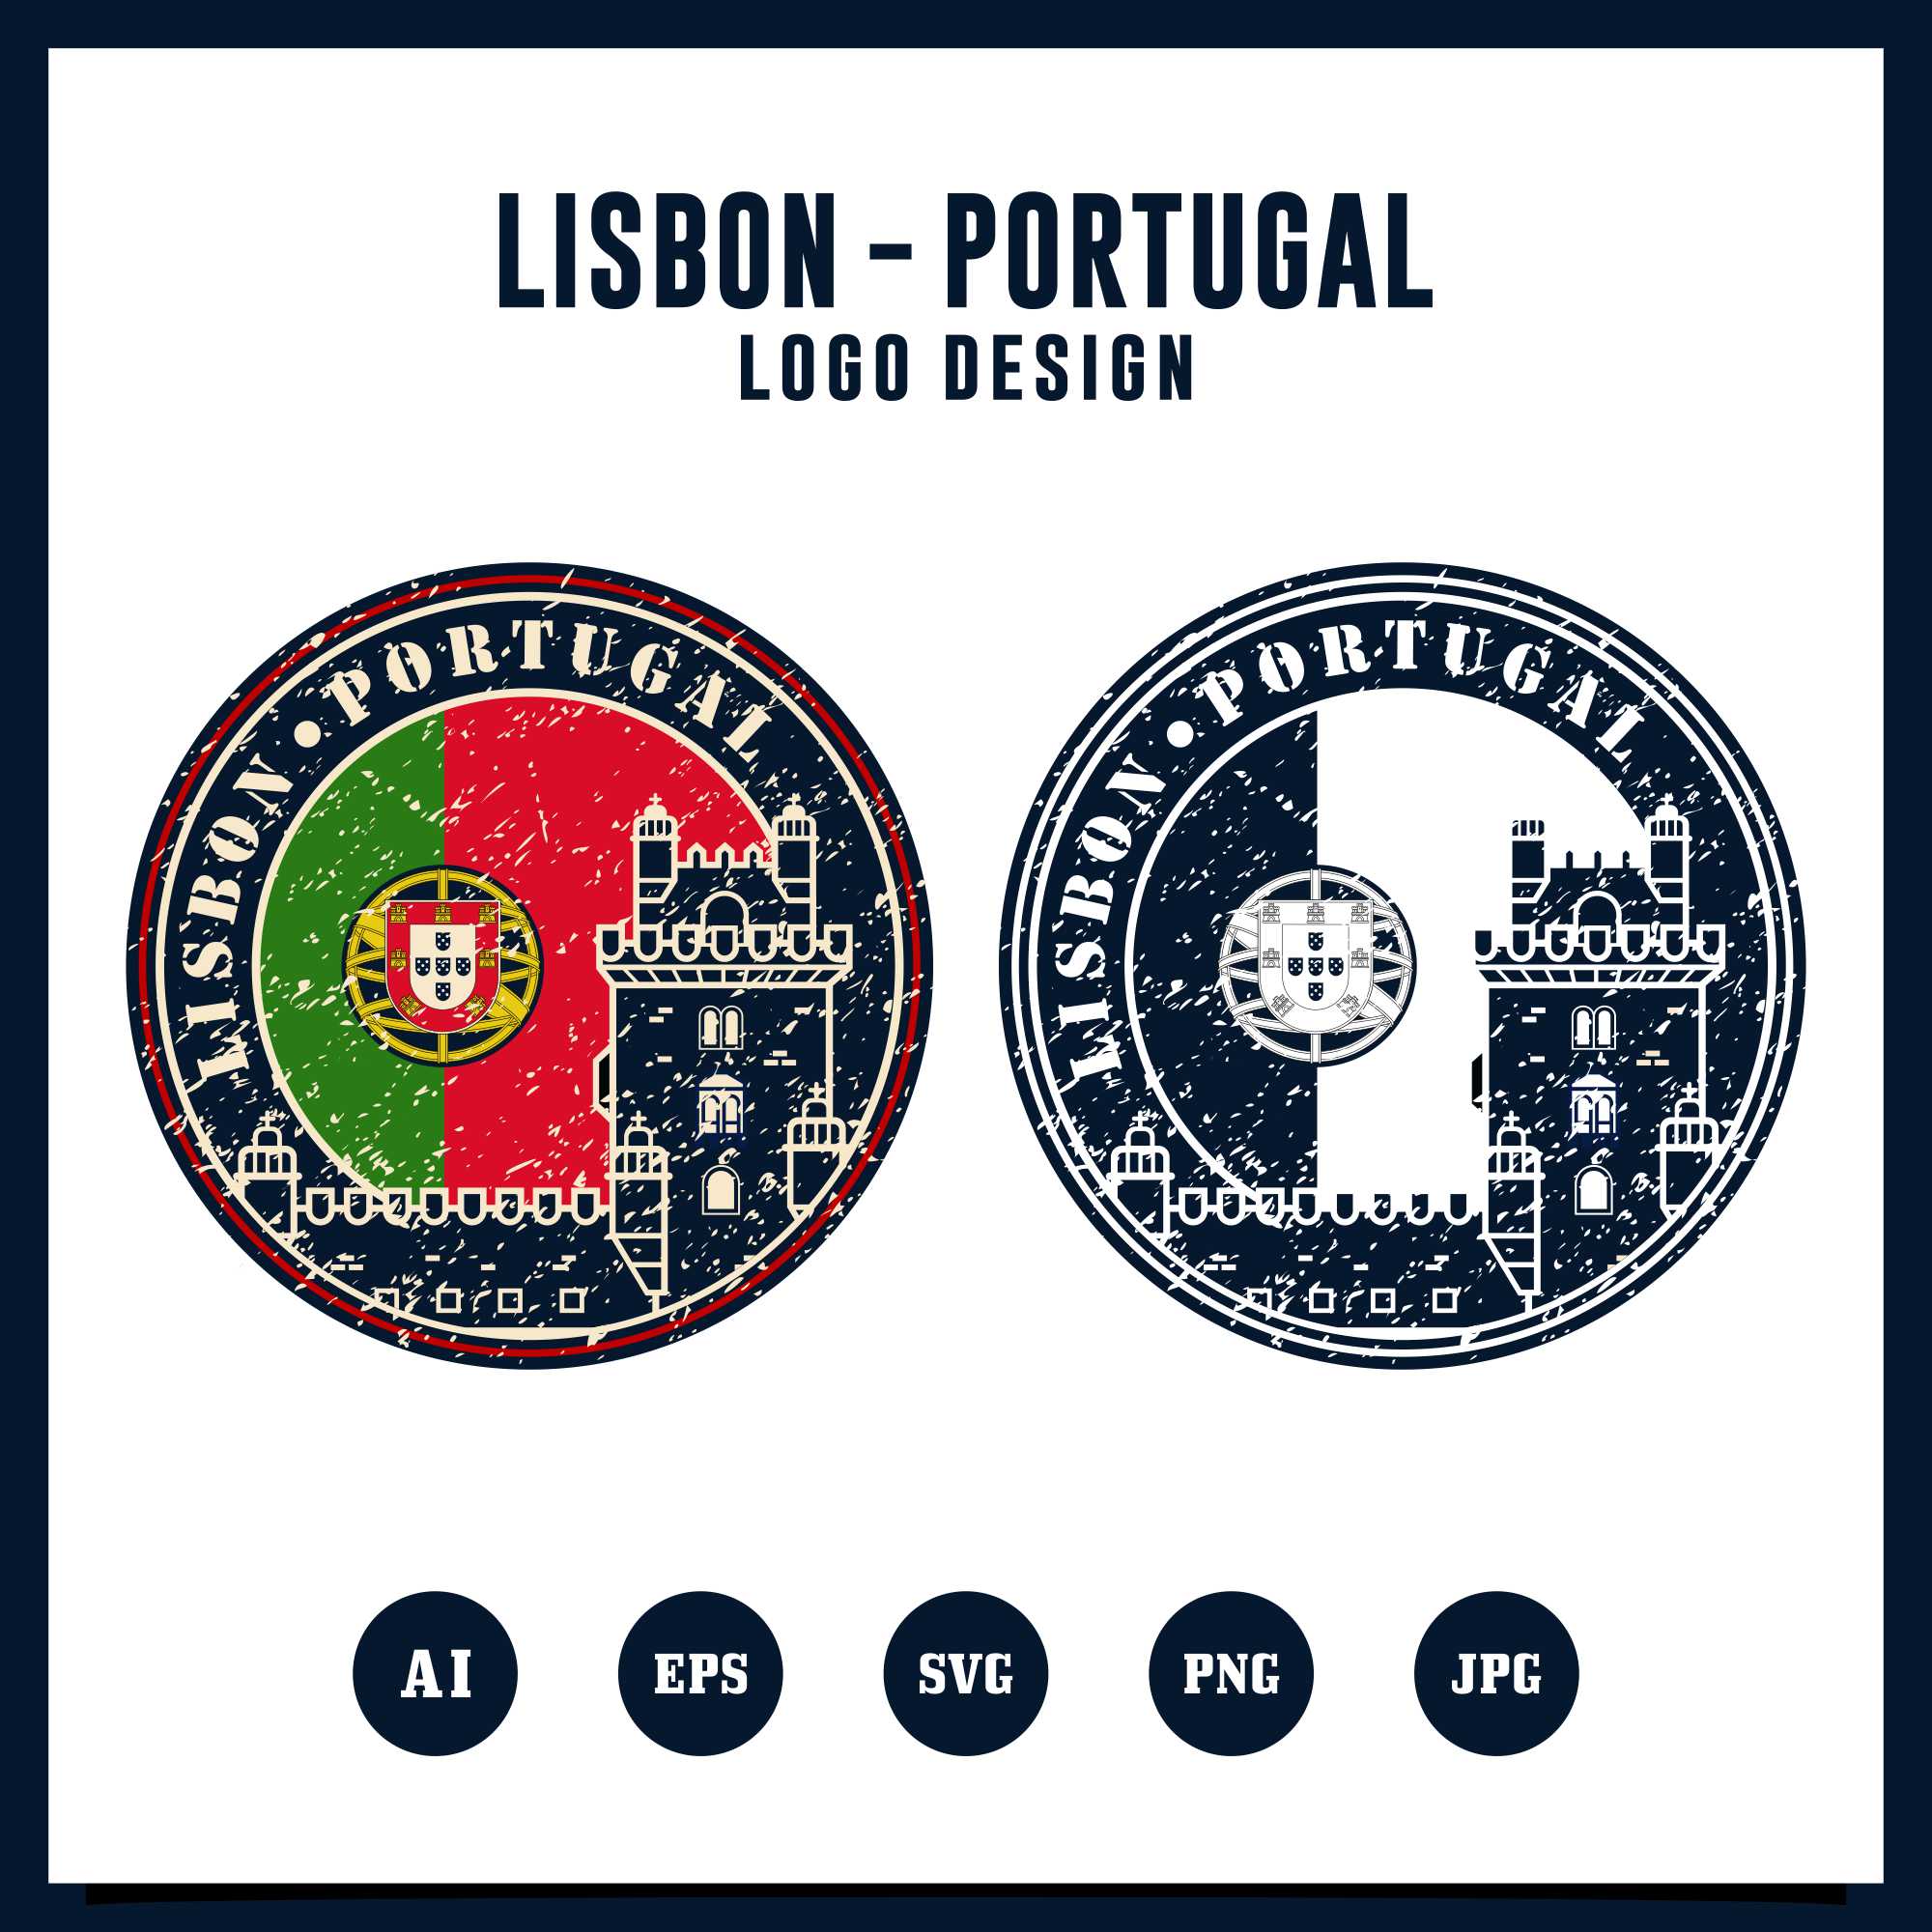 Lisbon portugal vector logo design collection - $4 cover image.